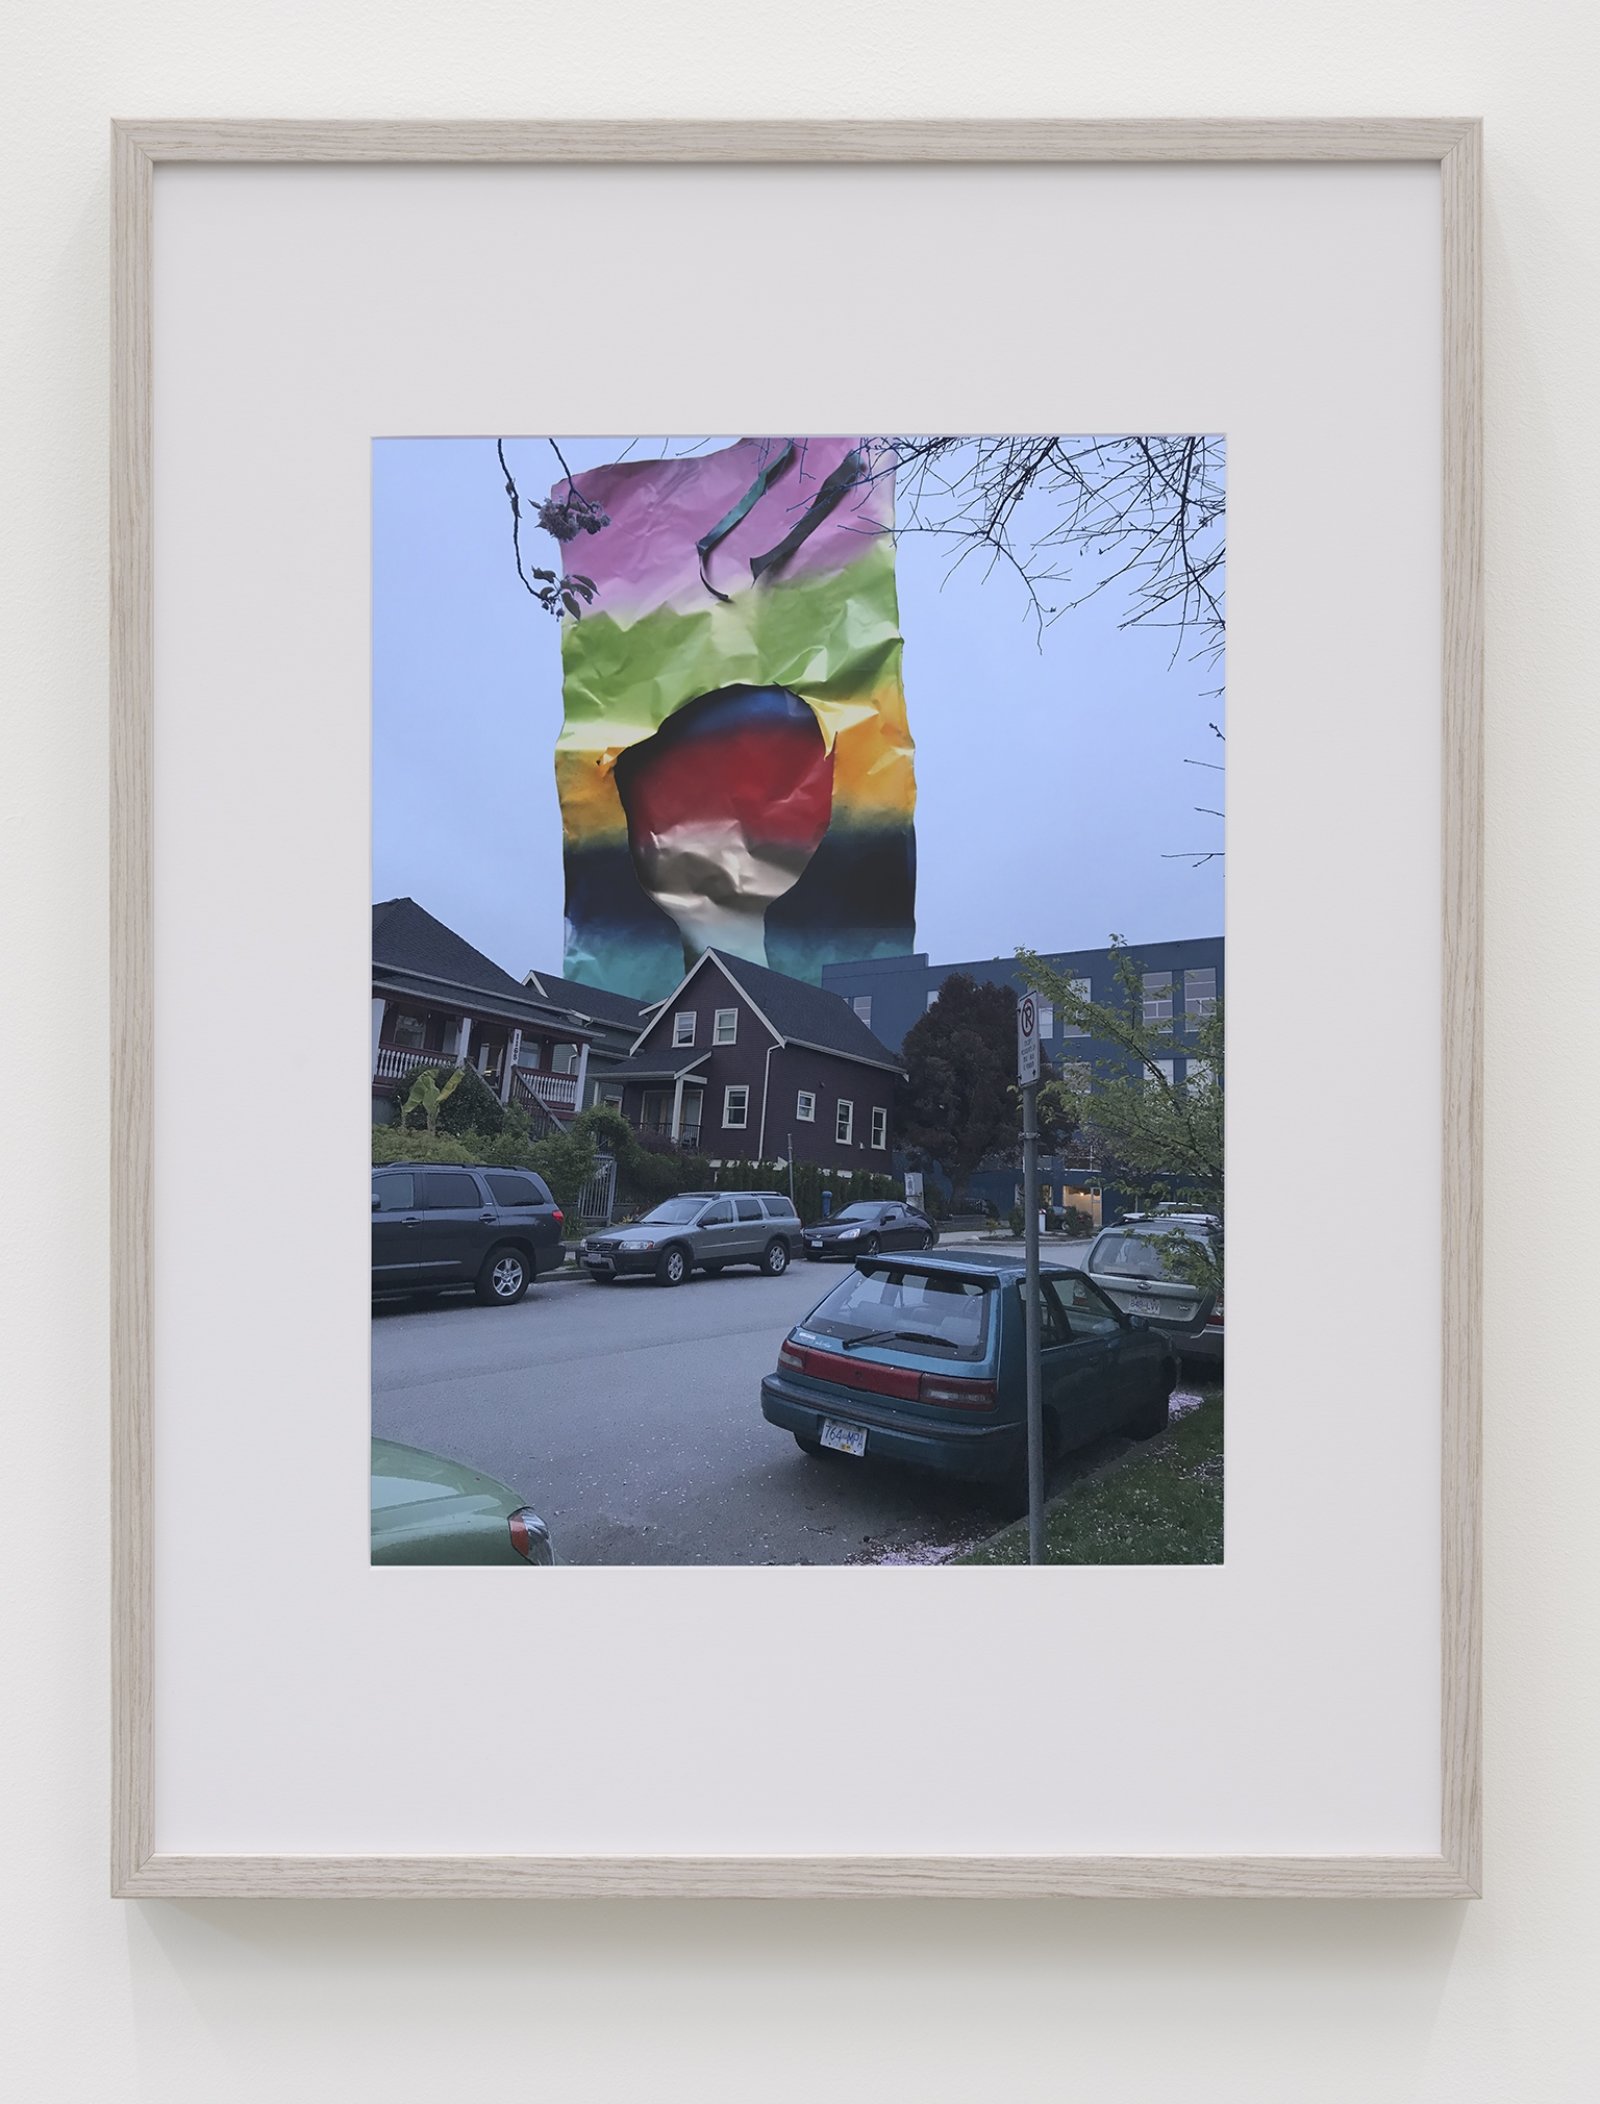 Damian Moppett, Day Monument, 2019, inkjet print, 41 x 33 in. (104 x 84 cm)